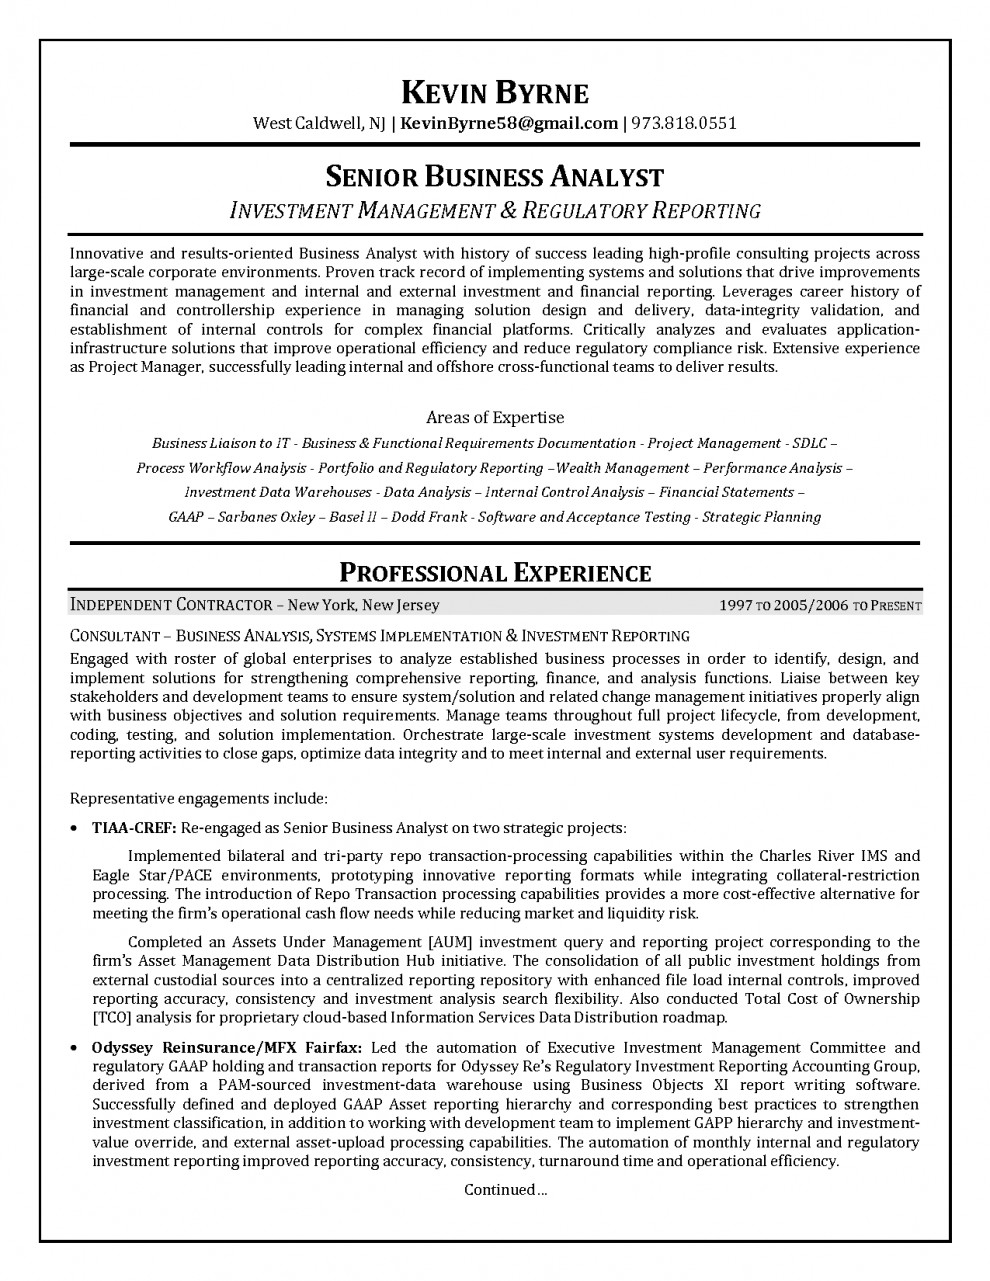 Senior Business Analyst Resume Resume Senior Business Analyst Resume format Business